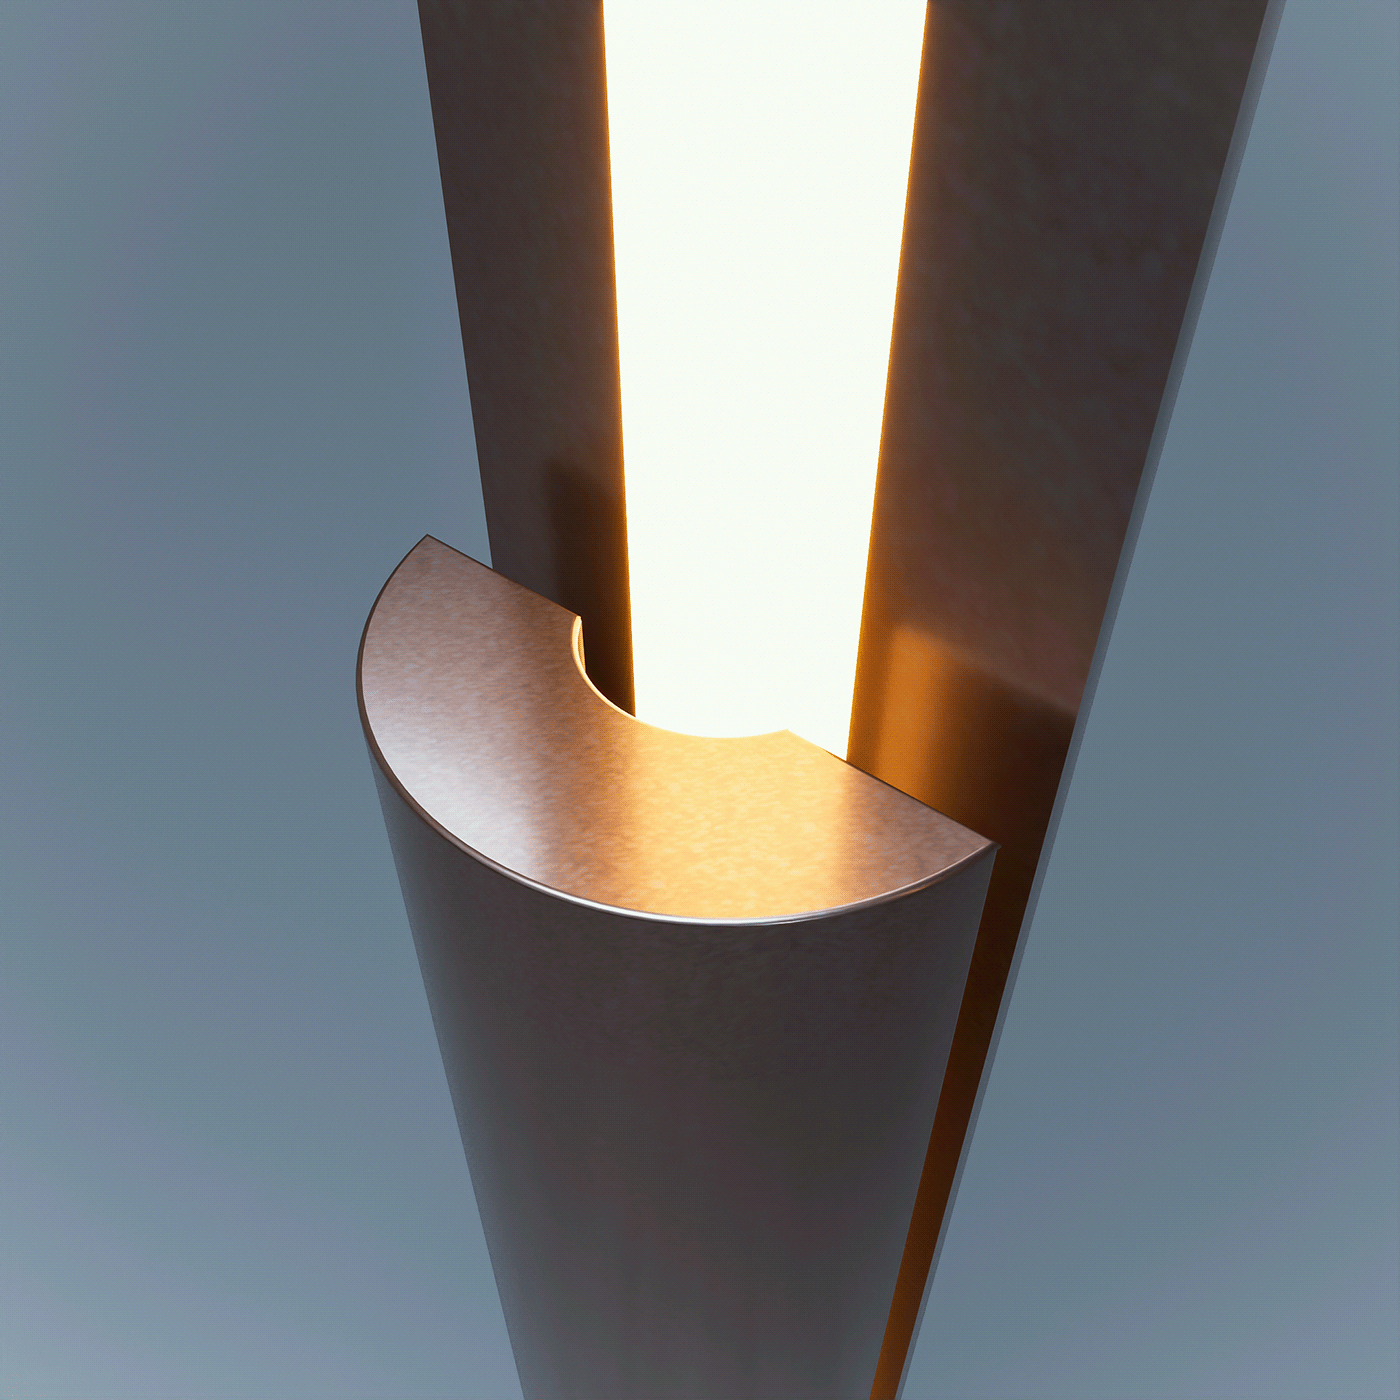 lamps lighting product design Render 3D archviz visualization architecture